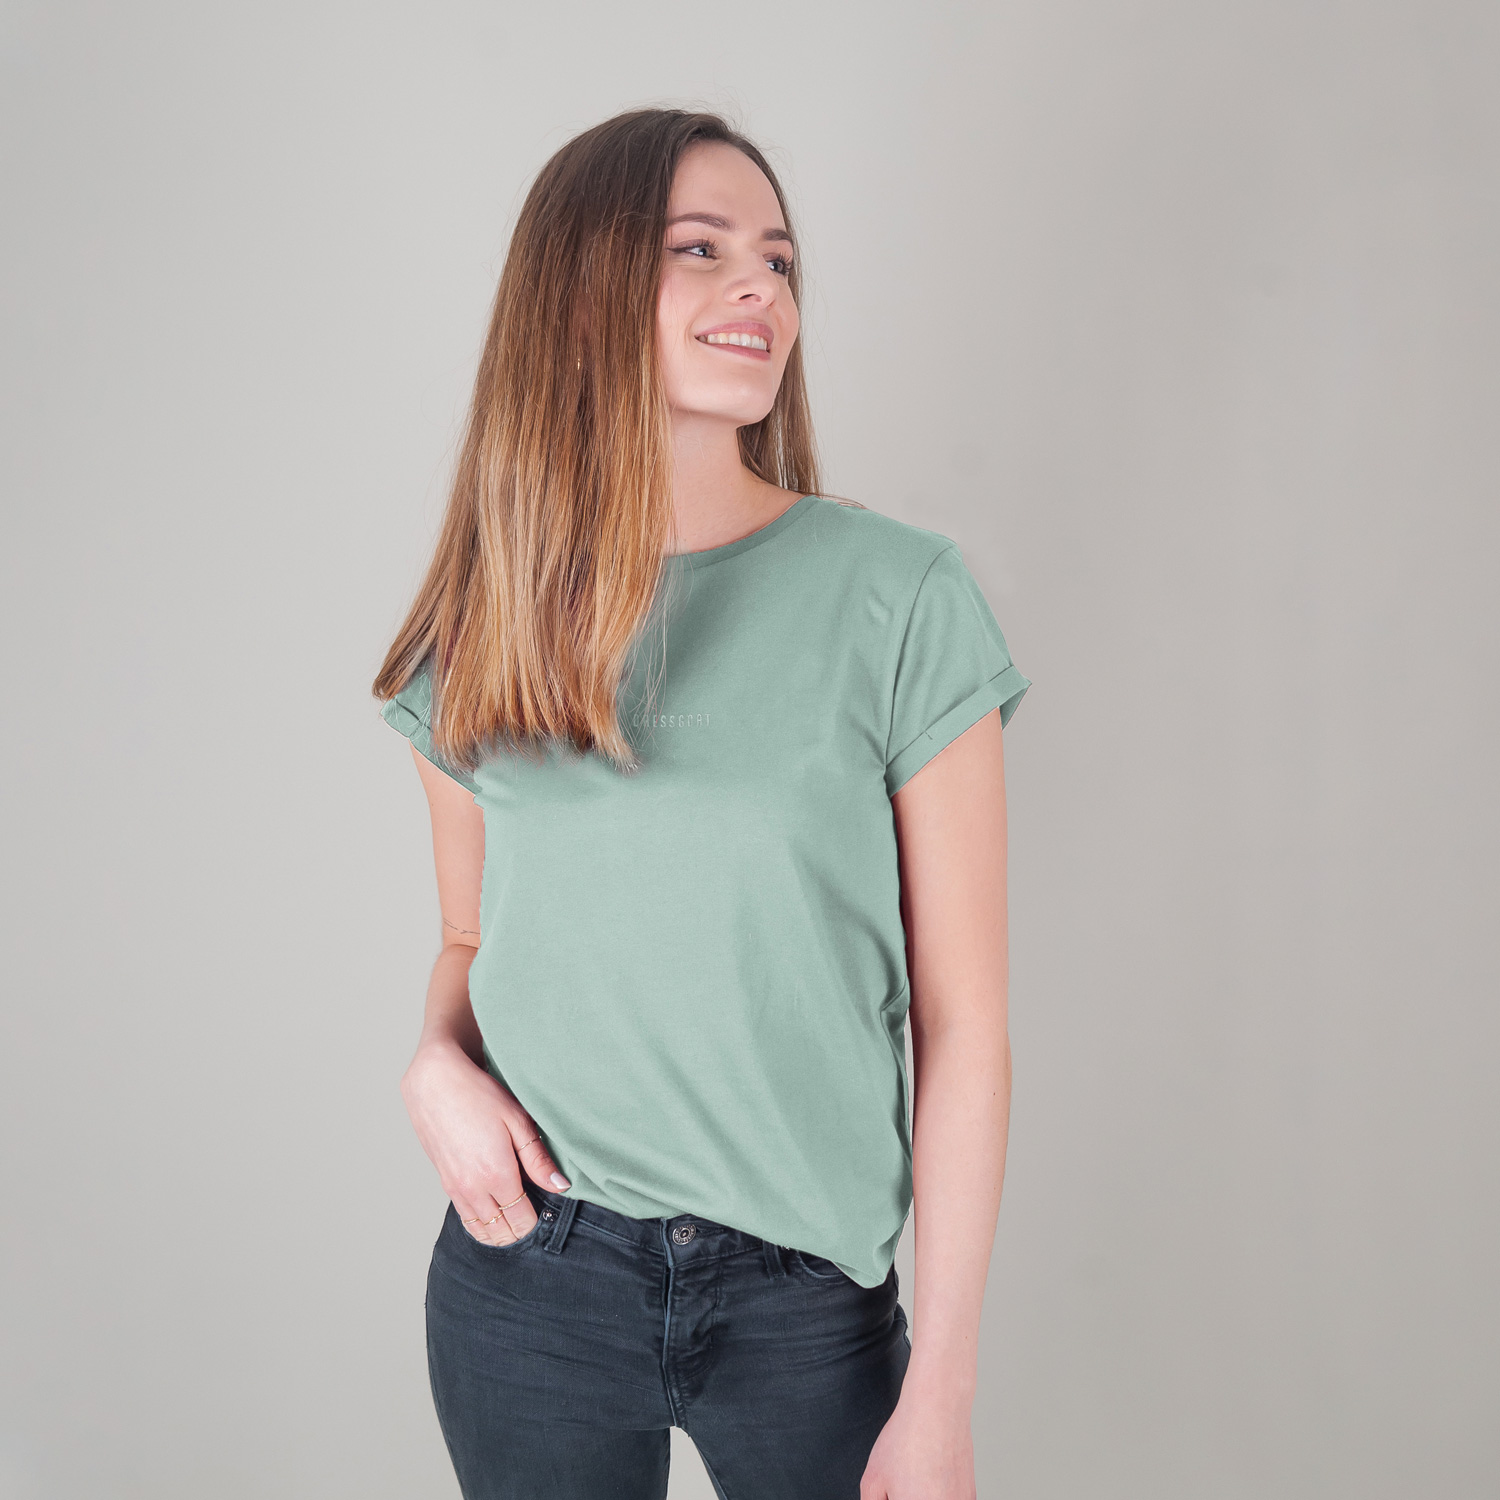 Frau trägt mintgrünes T-Shirt